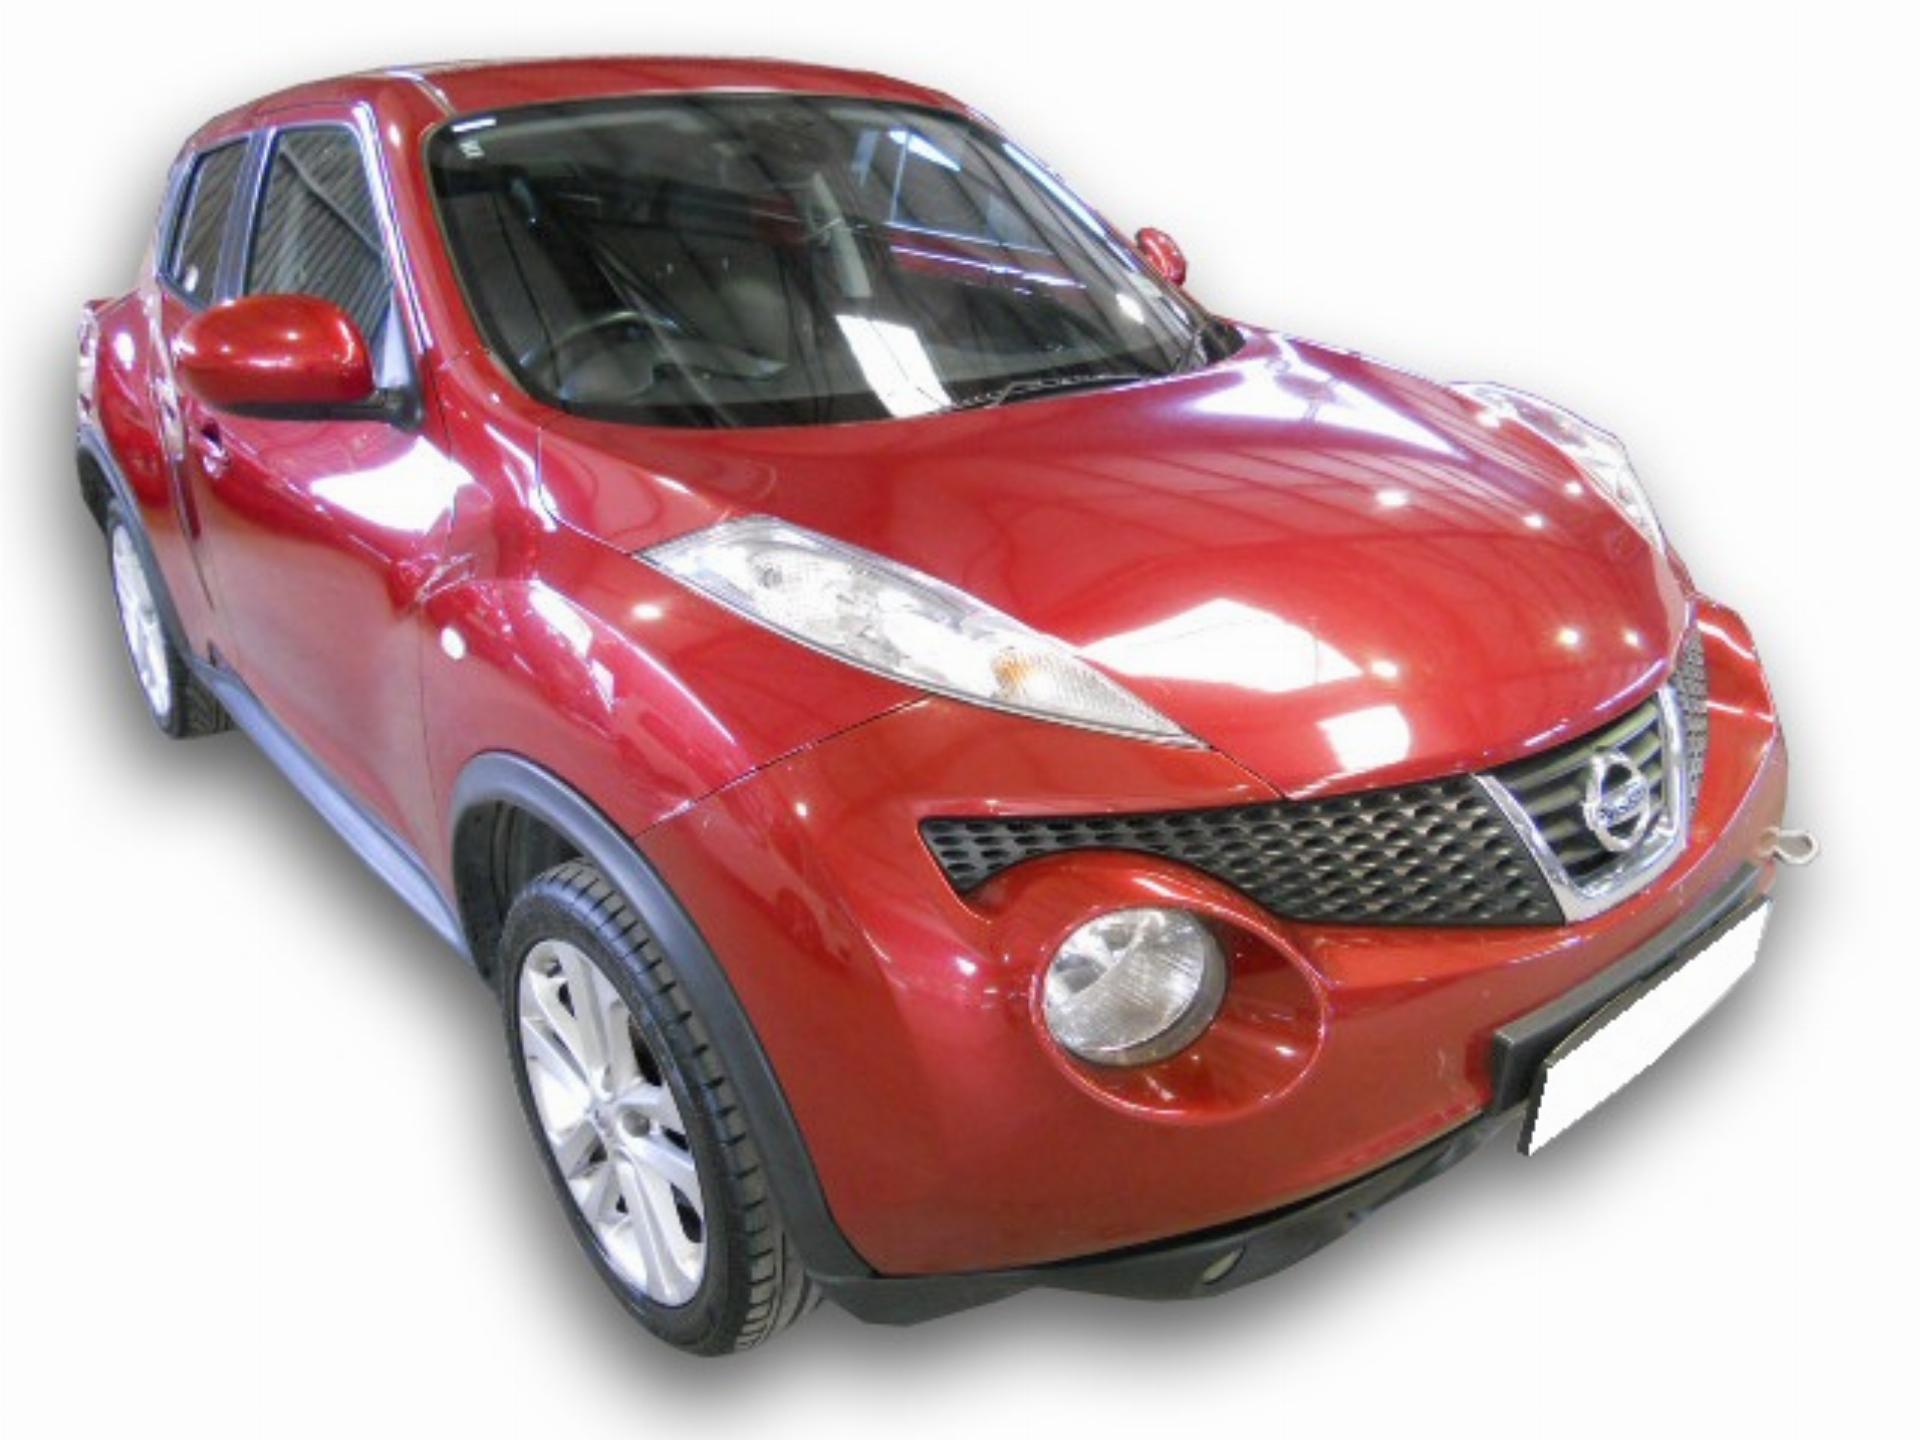 Repossessed Nissan Juke 1.6 L Digttek 2012 on auction